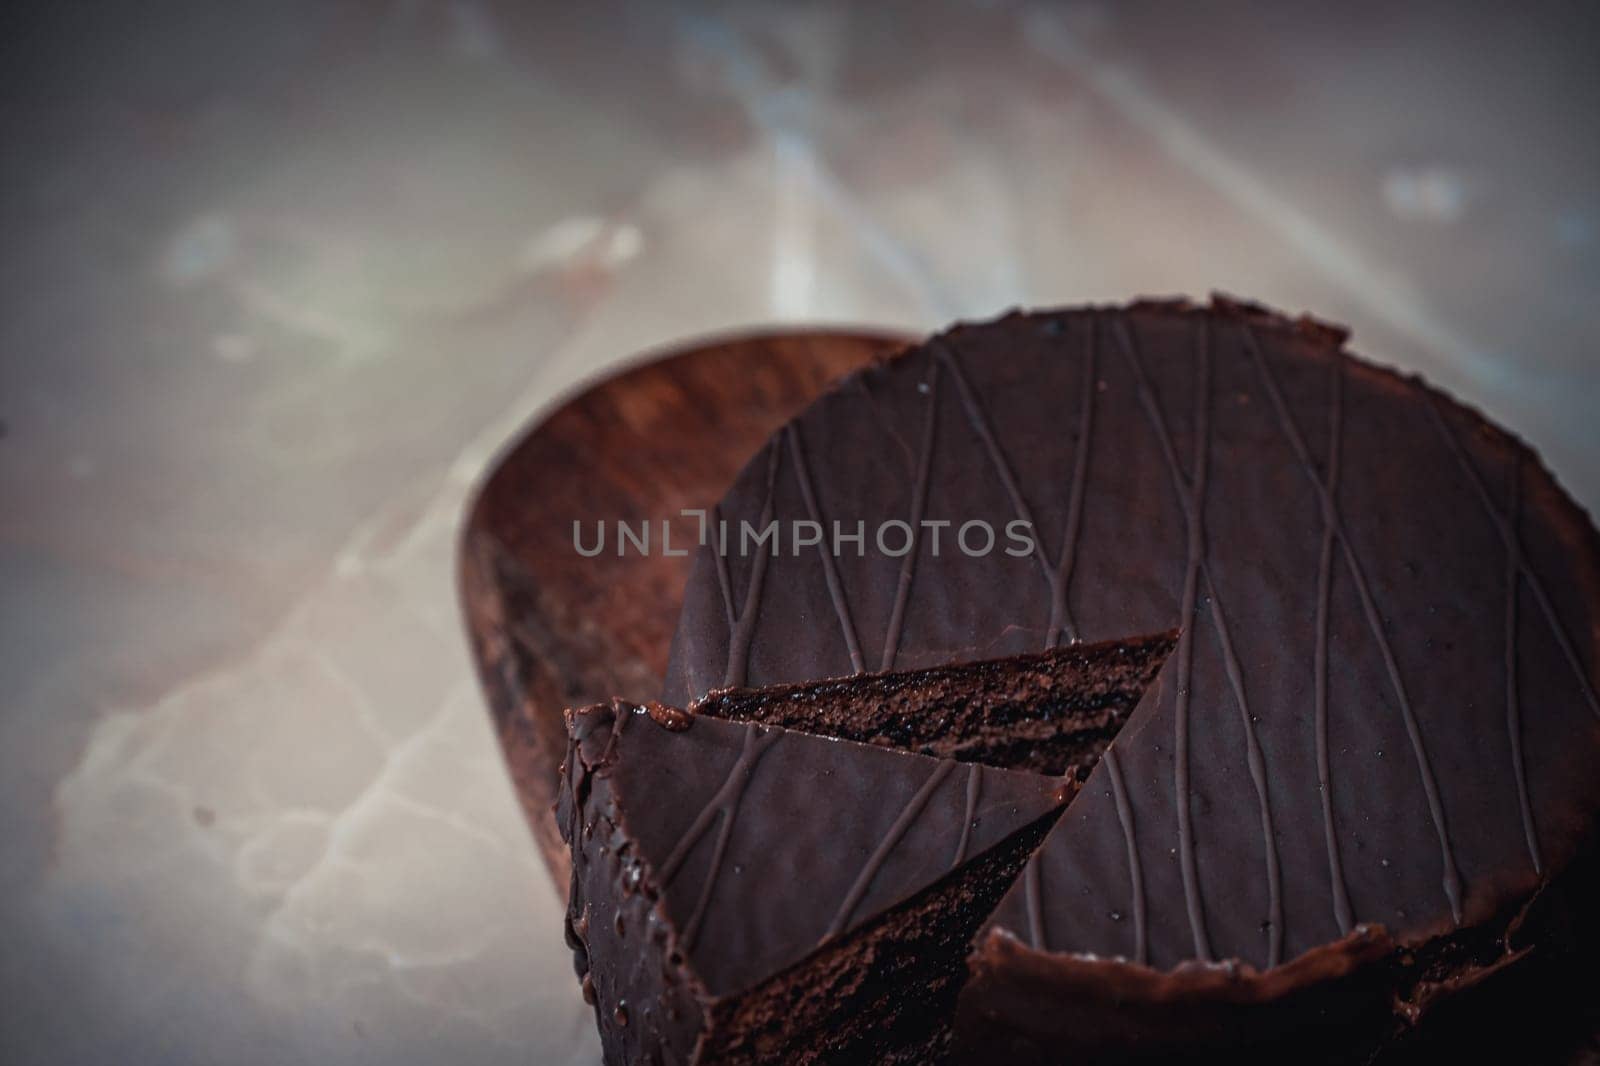 Round chocolate cake with triangular slice cut off. High quality photo